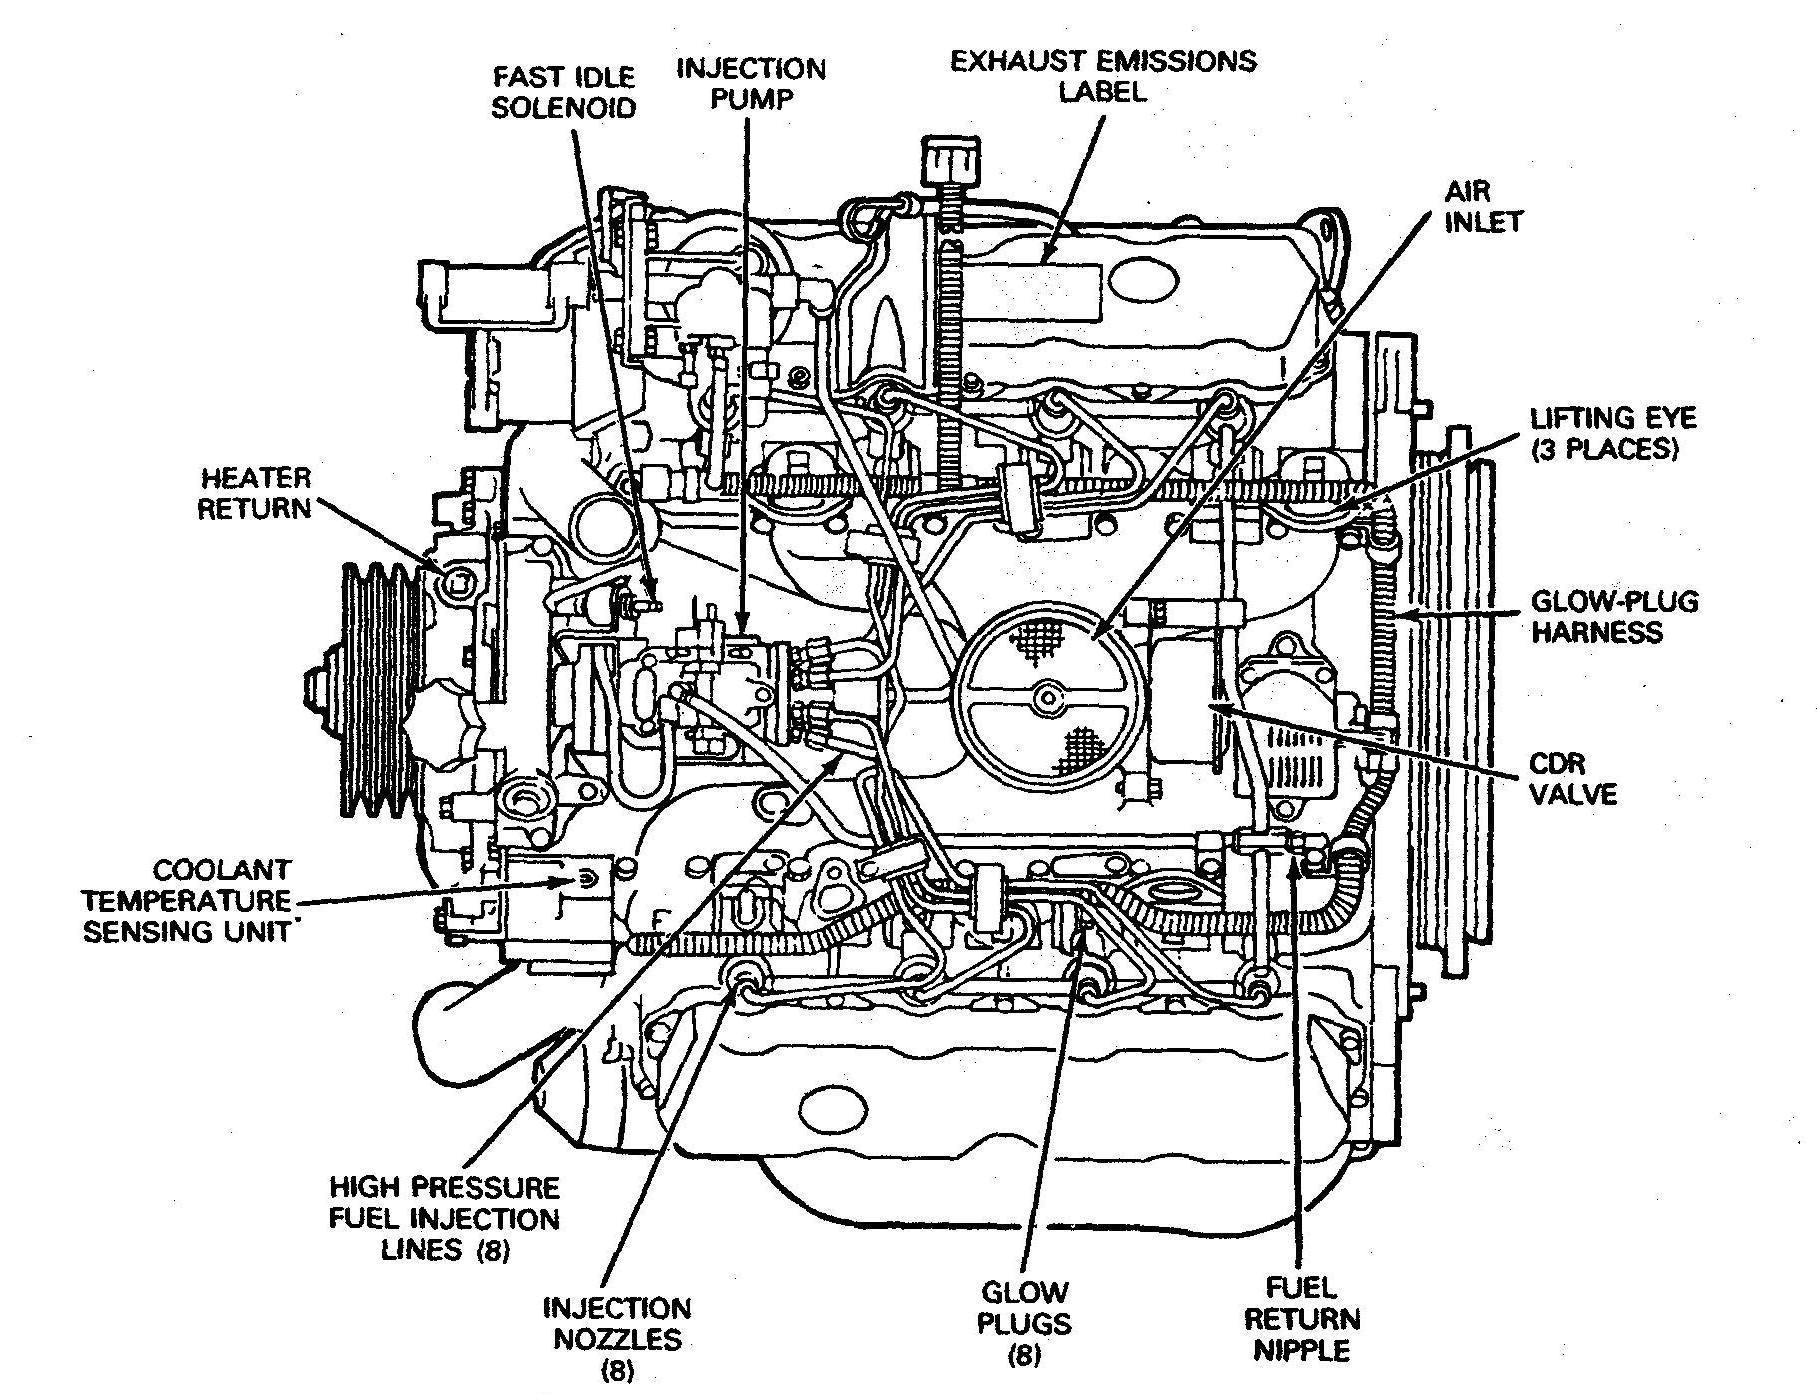 Car Parts by Diagram Automotive Engine Diagram Wiring Diagrams Of Car Parts by Diagram